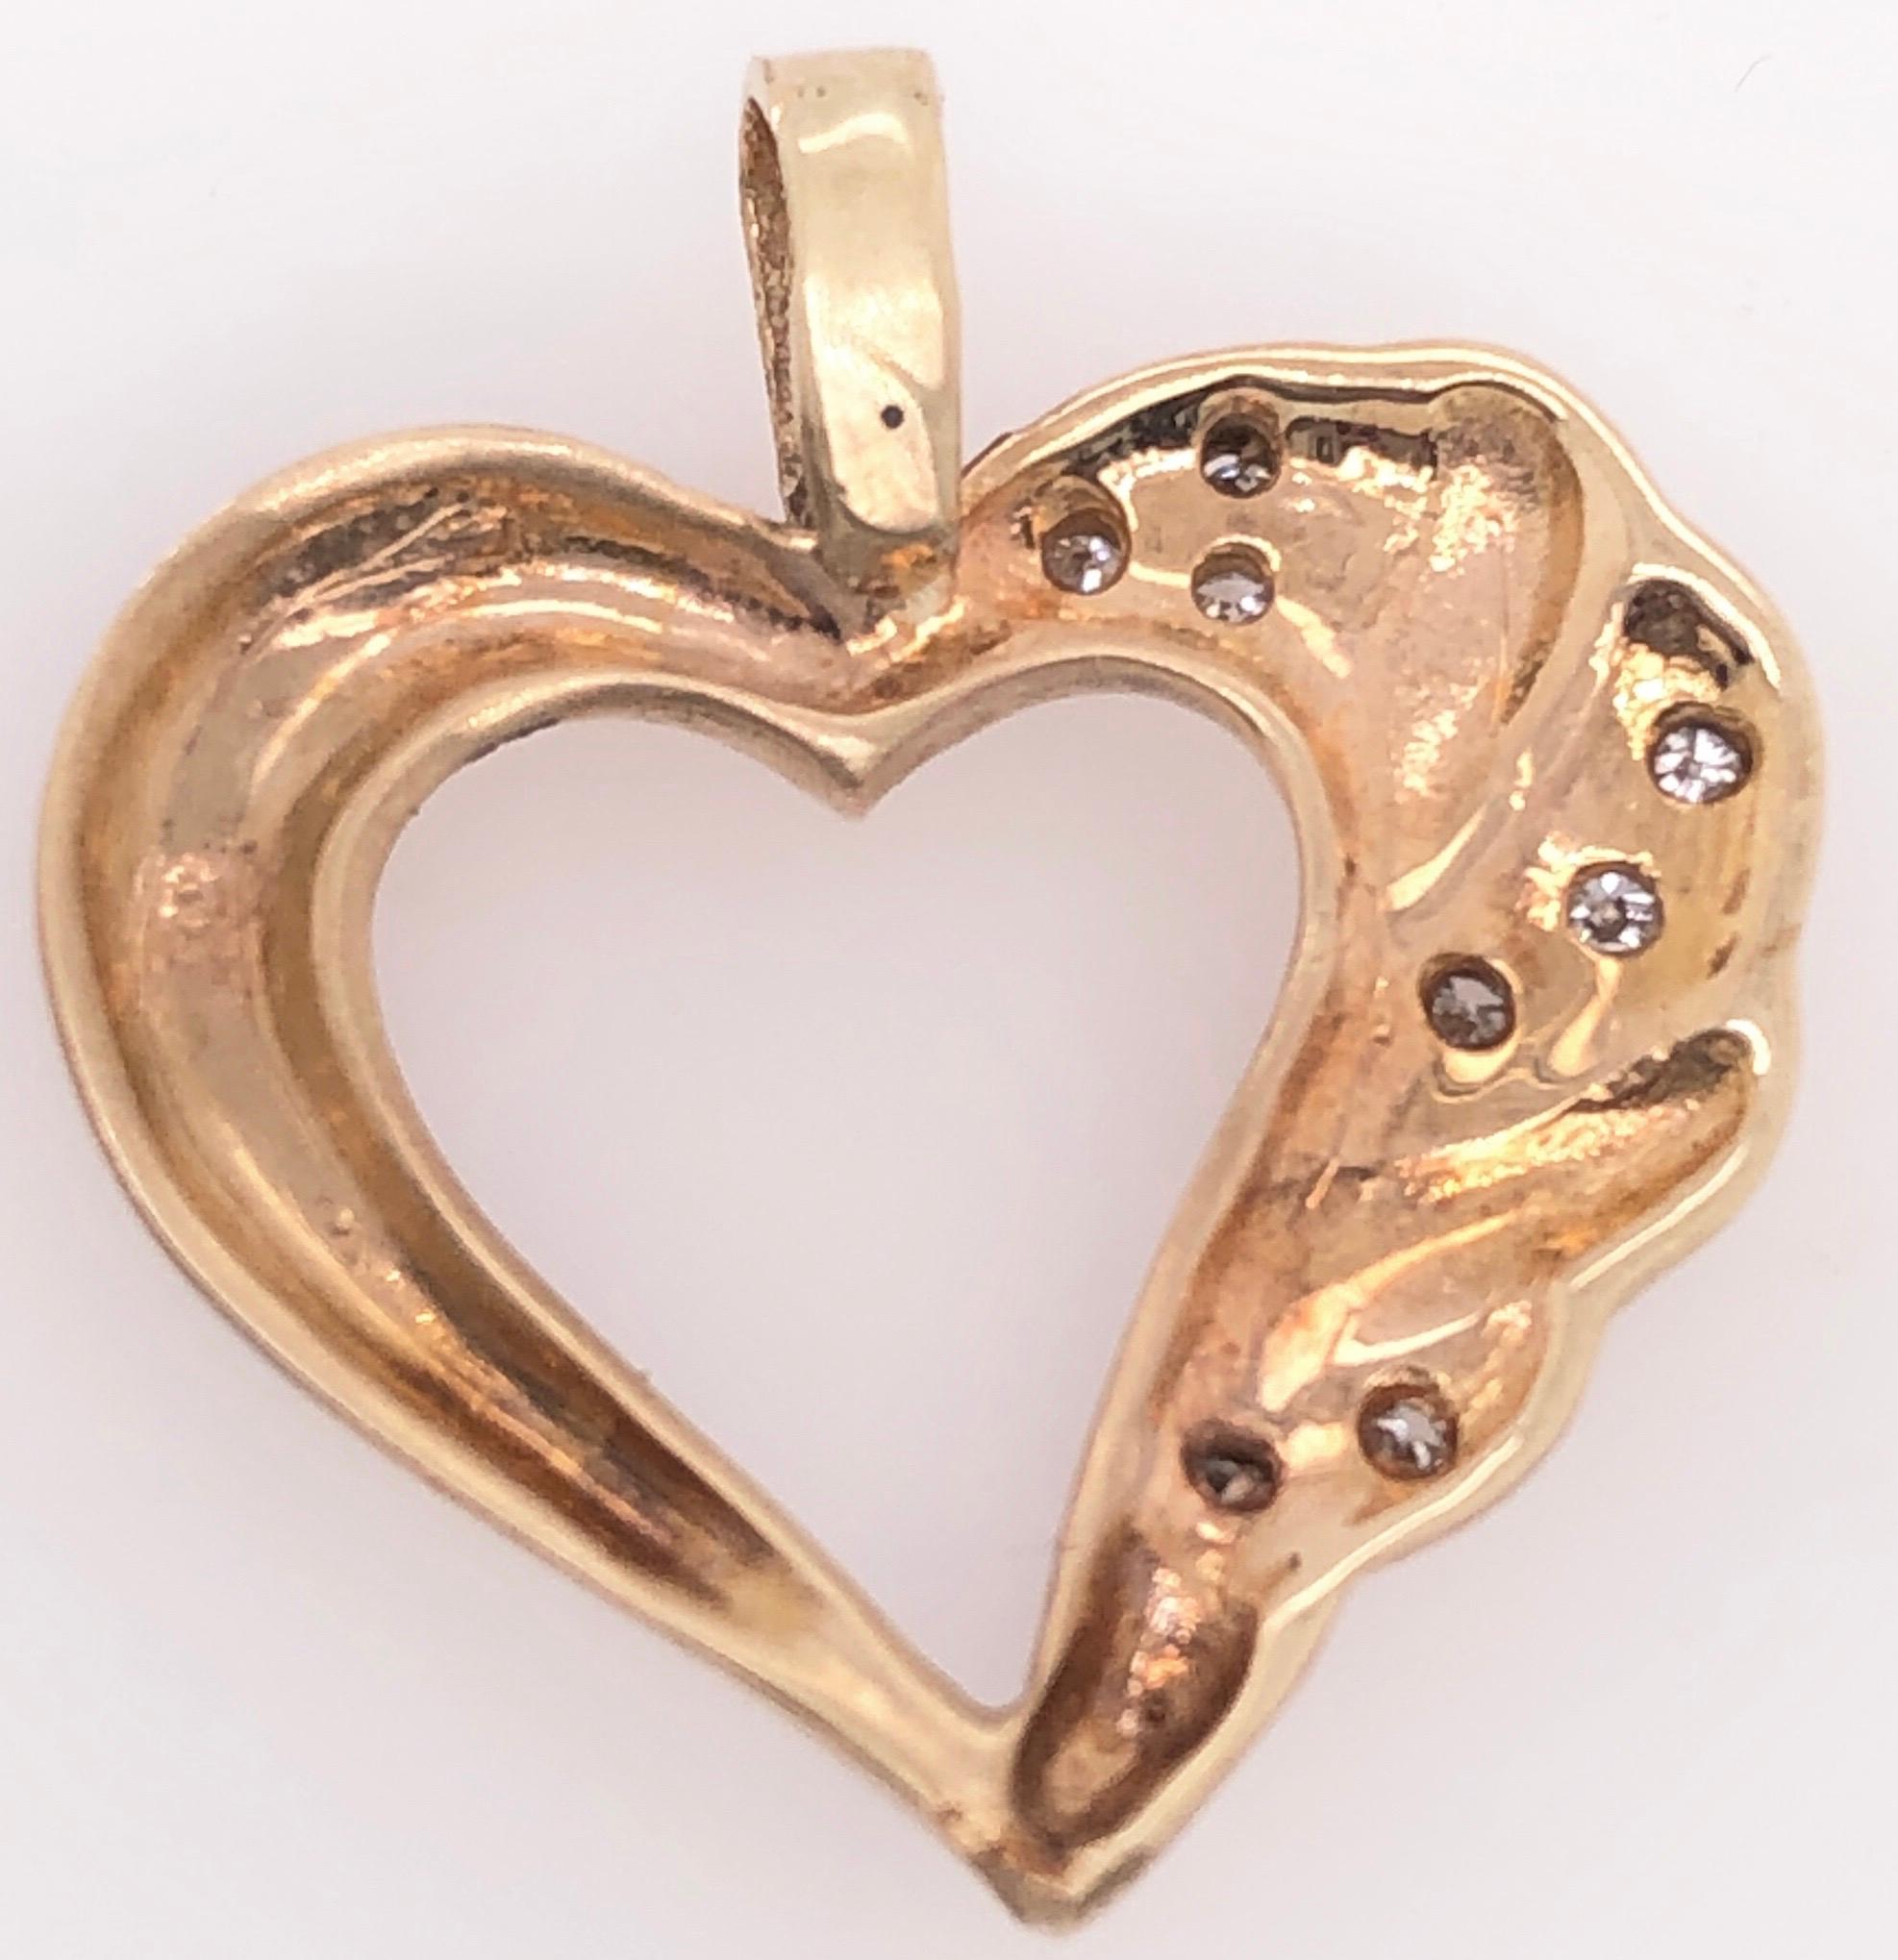 14 Karat Yellow Gold Heart Pendant with Round Diamonds.
3.4 grams total weight.